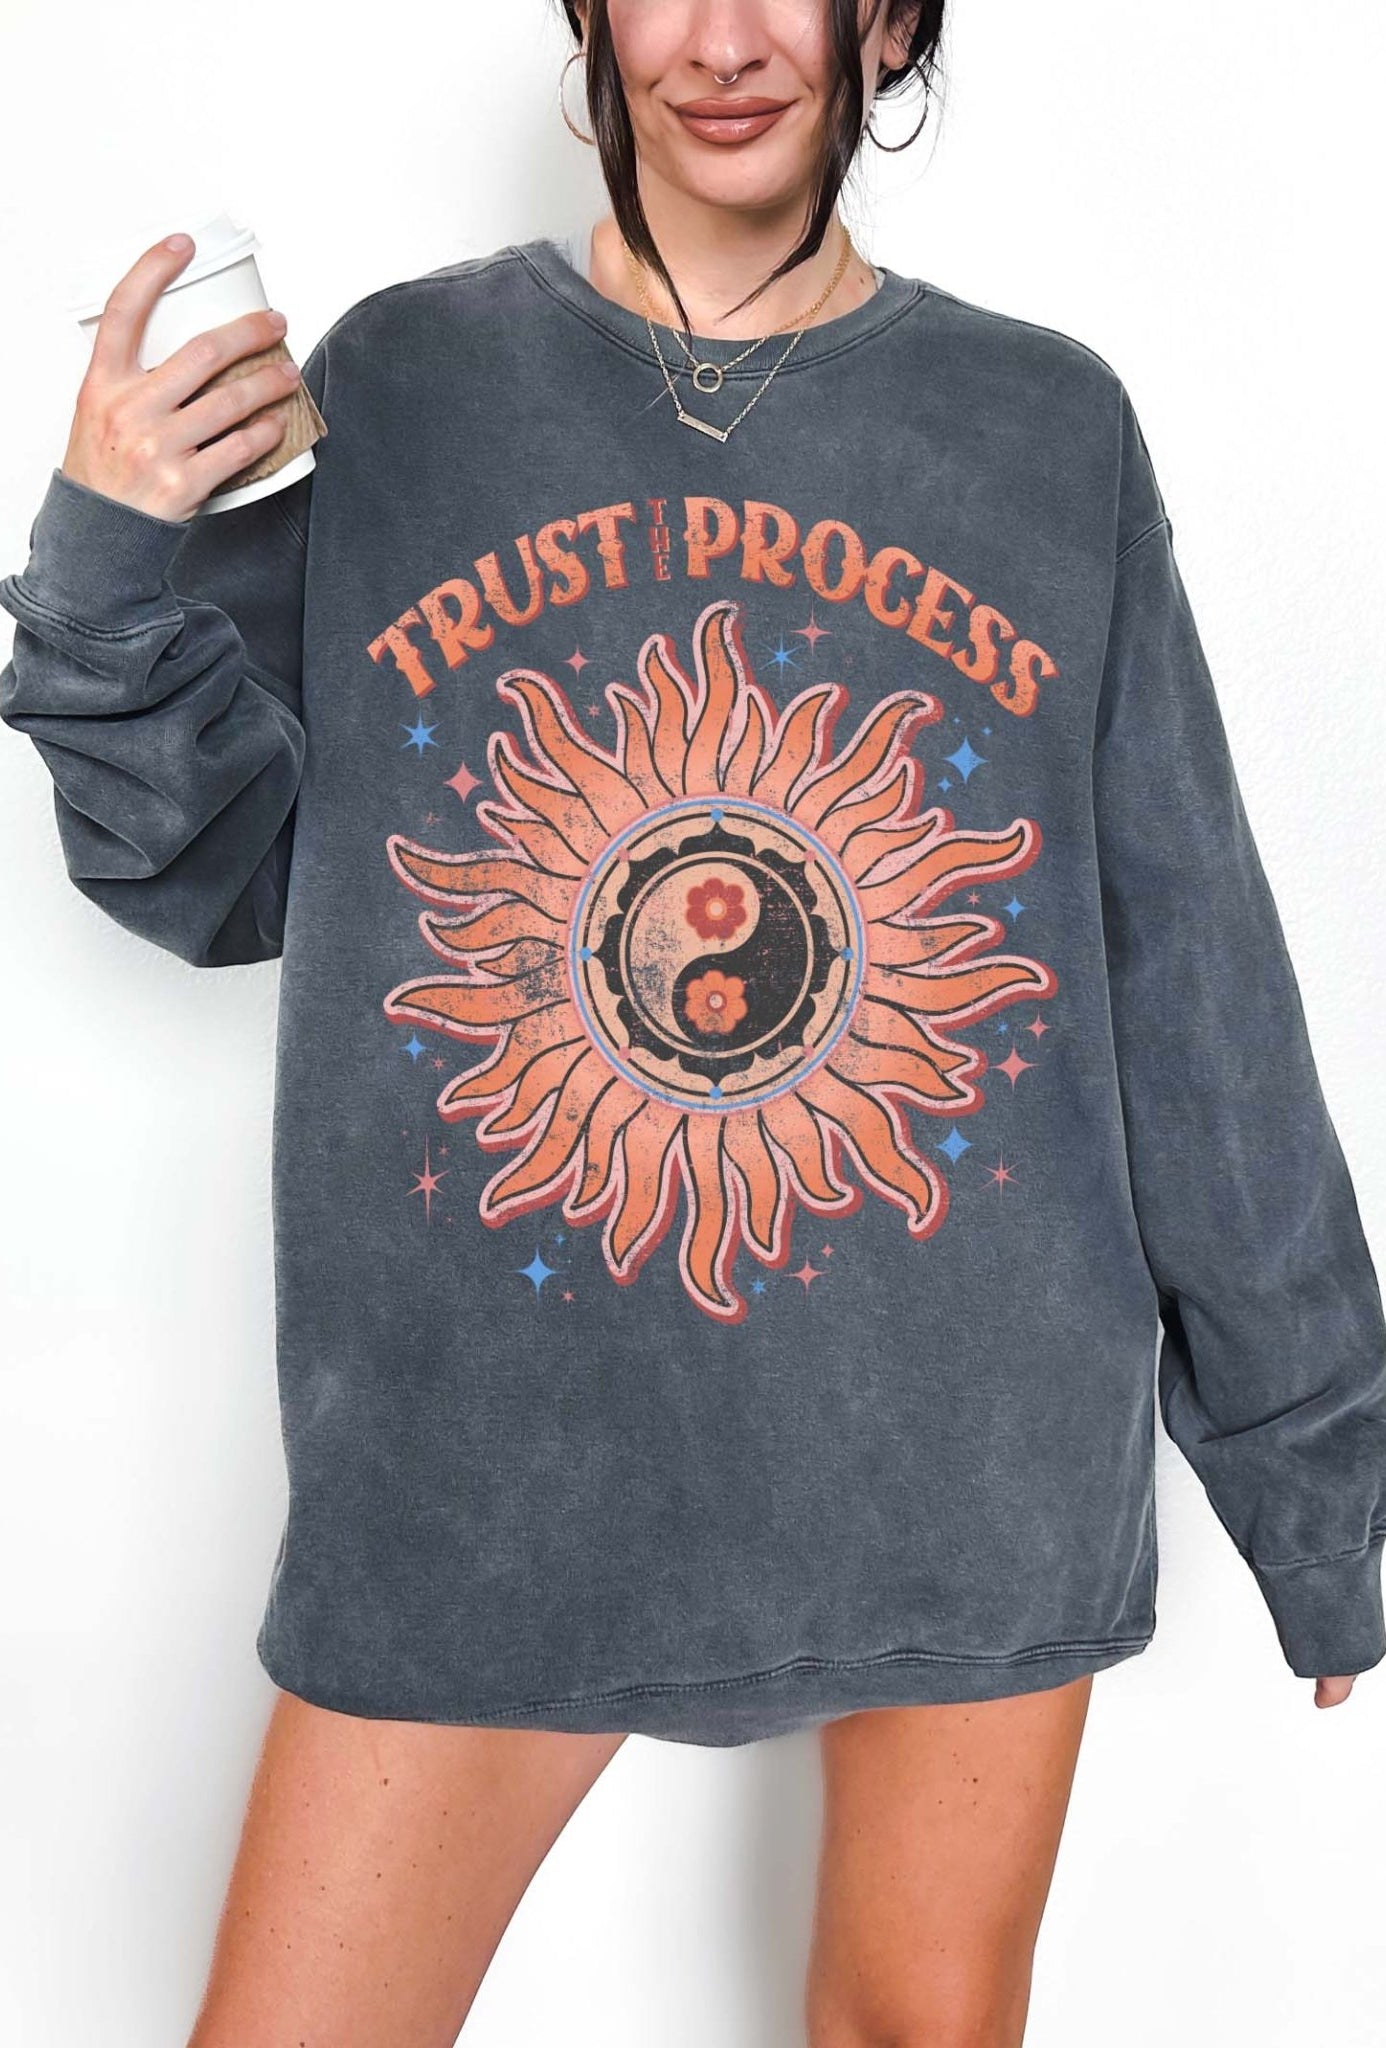 Trust The Process Crew Sweatshirt - UntamedEgo LLC.